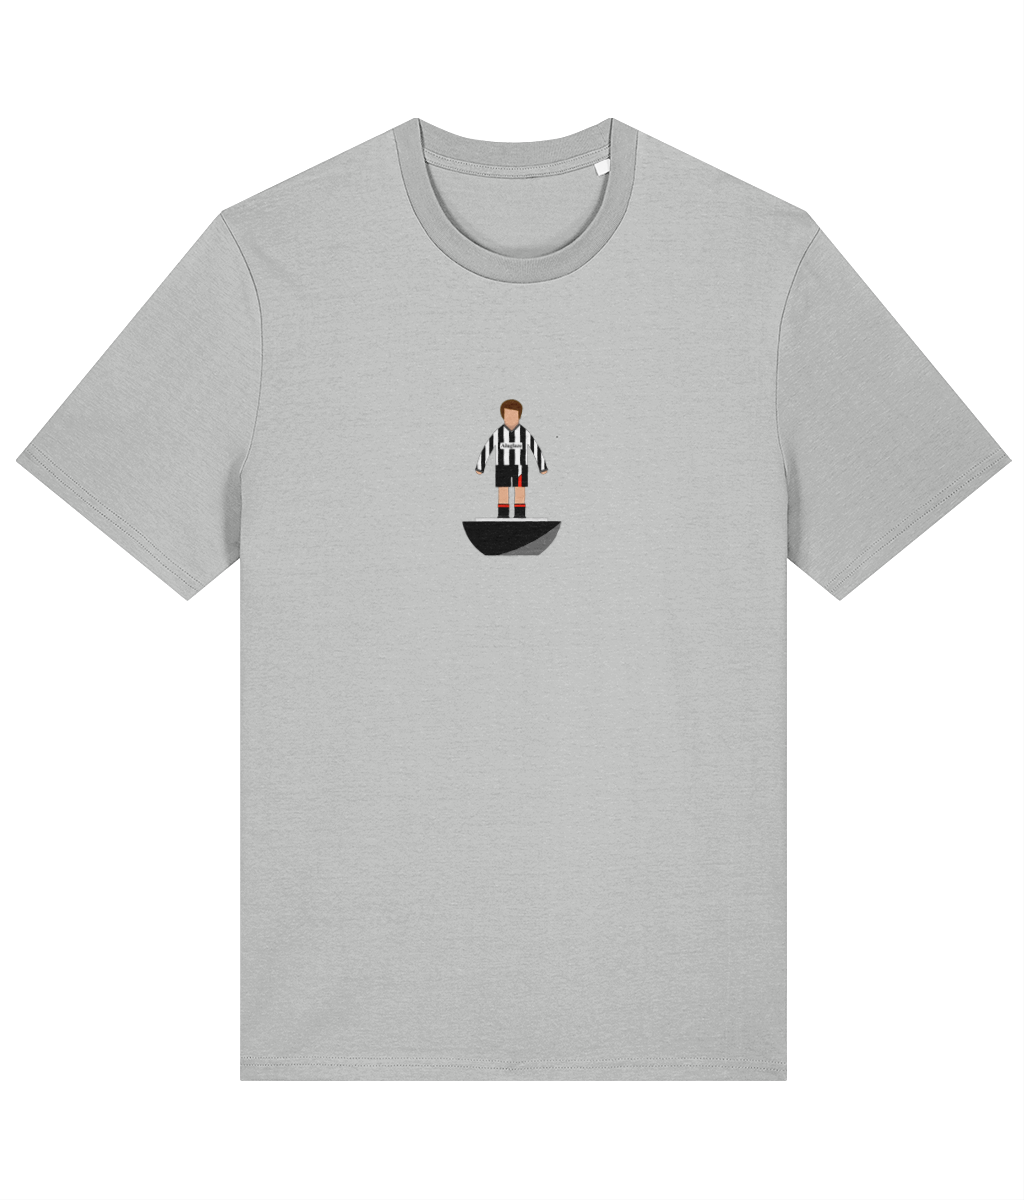 Football Kits 'Dunfermline 1986' Unisex T-Shirt